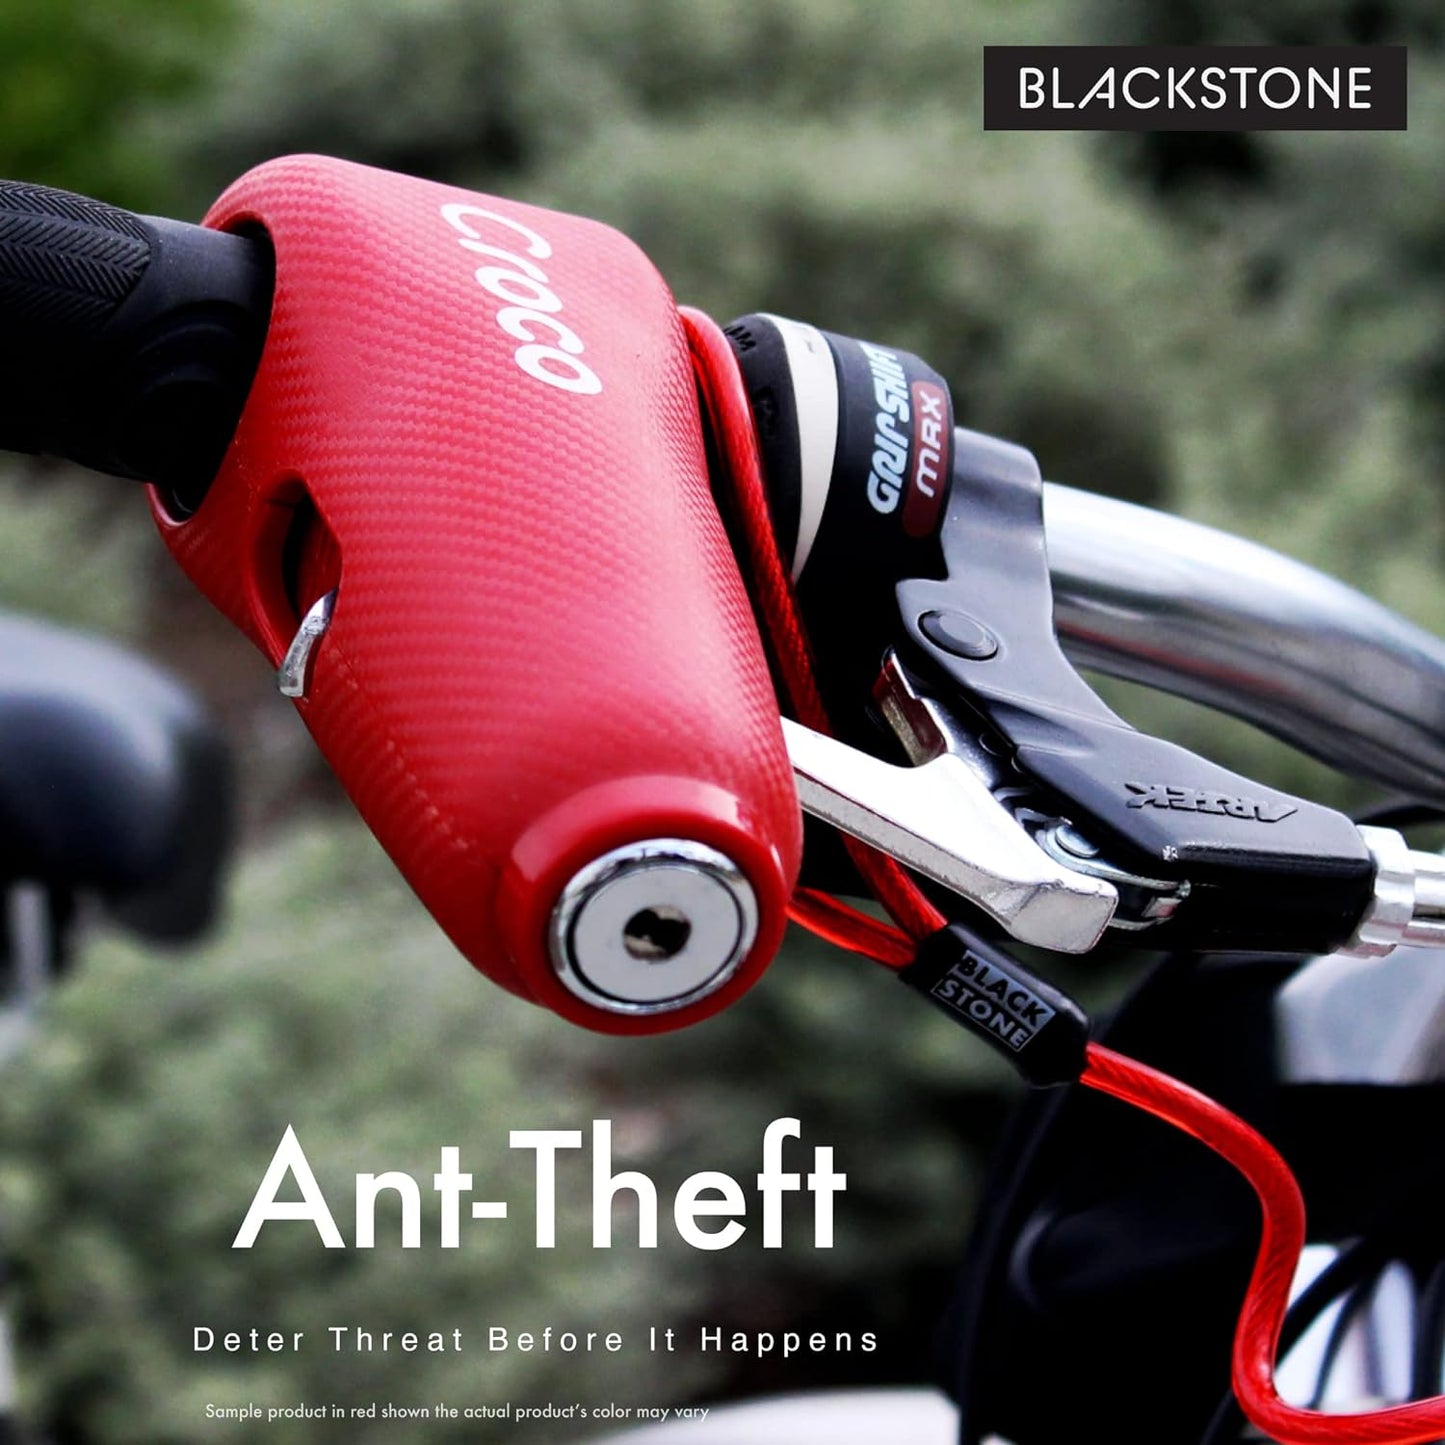 Blackstone Alarm Grip Lock with 130 db Alarm Waterproof Scooter E-Bike Motorcycle Anti-Theft Security Handle Bar Grip Lock Brake Lever Lock (Camo White)